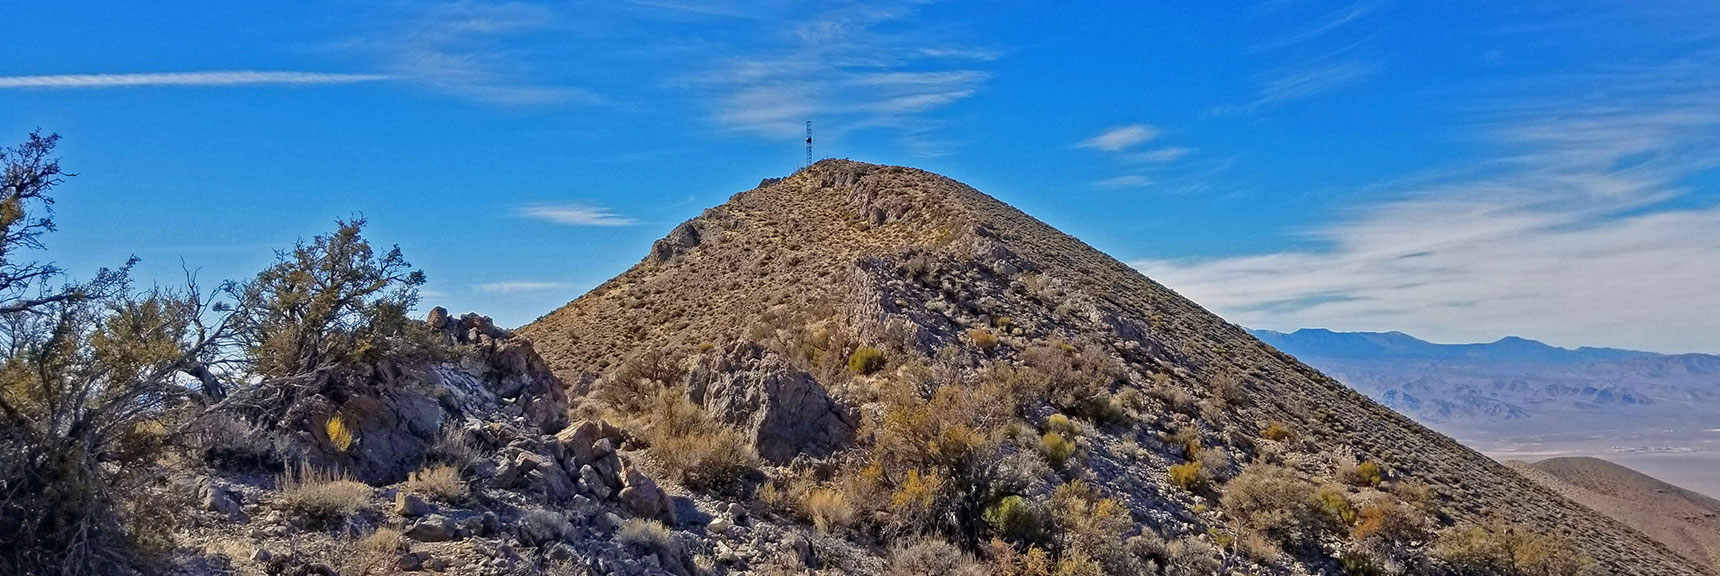 Final Stretch of Ridge to Gass Peak's Summit. | Gass Peak Grand Crossing | Desert National Wildlife Refuge to Centennial Hills Las Vegas via Gass Peak Summit by Foot